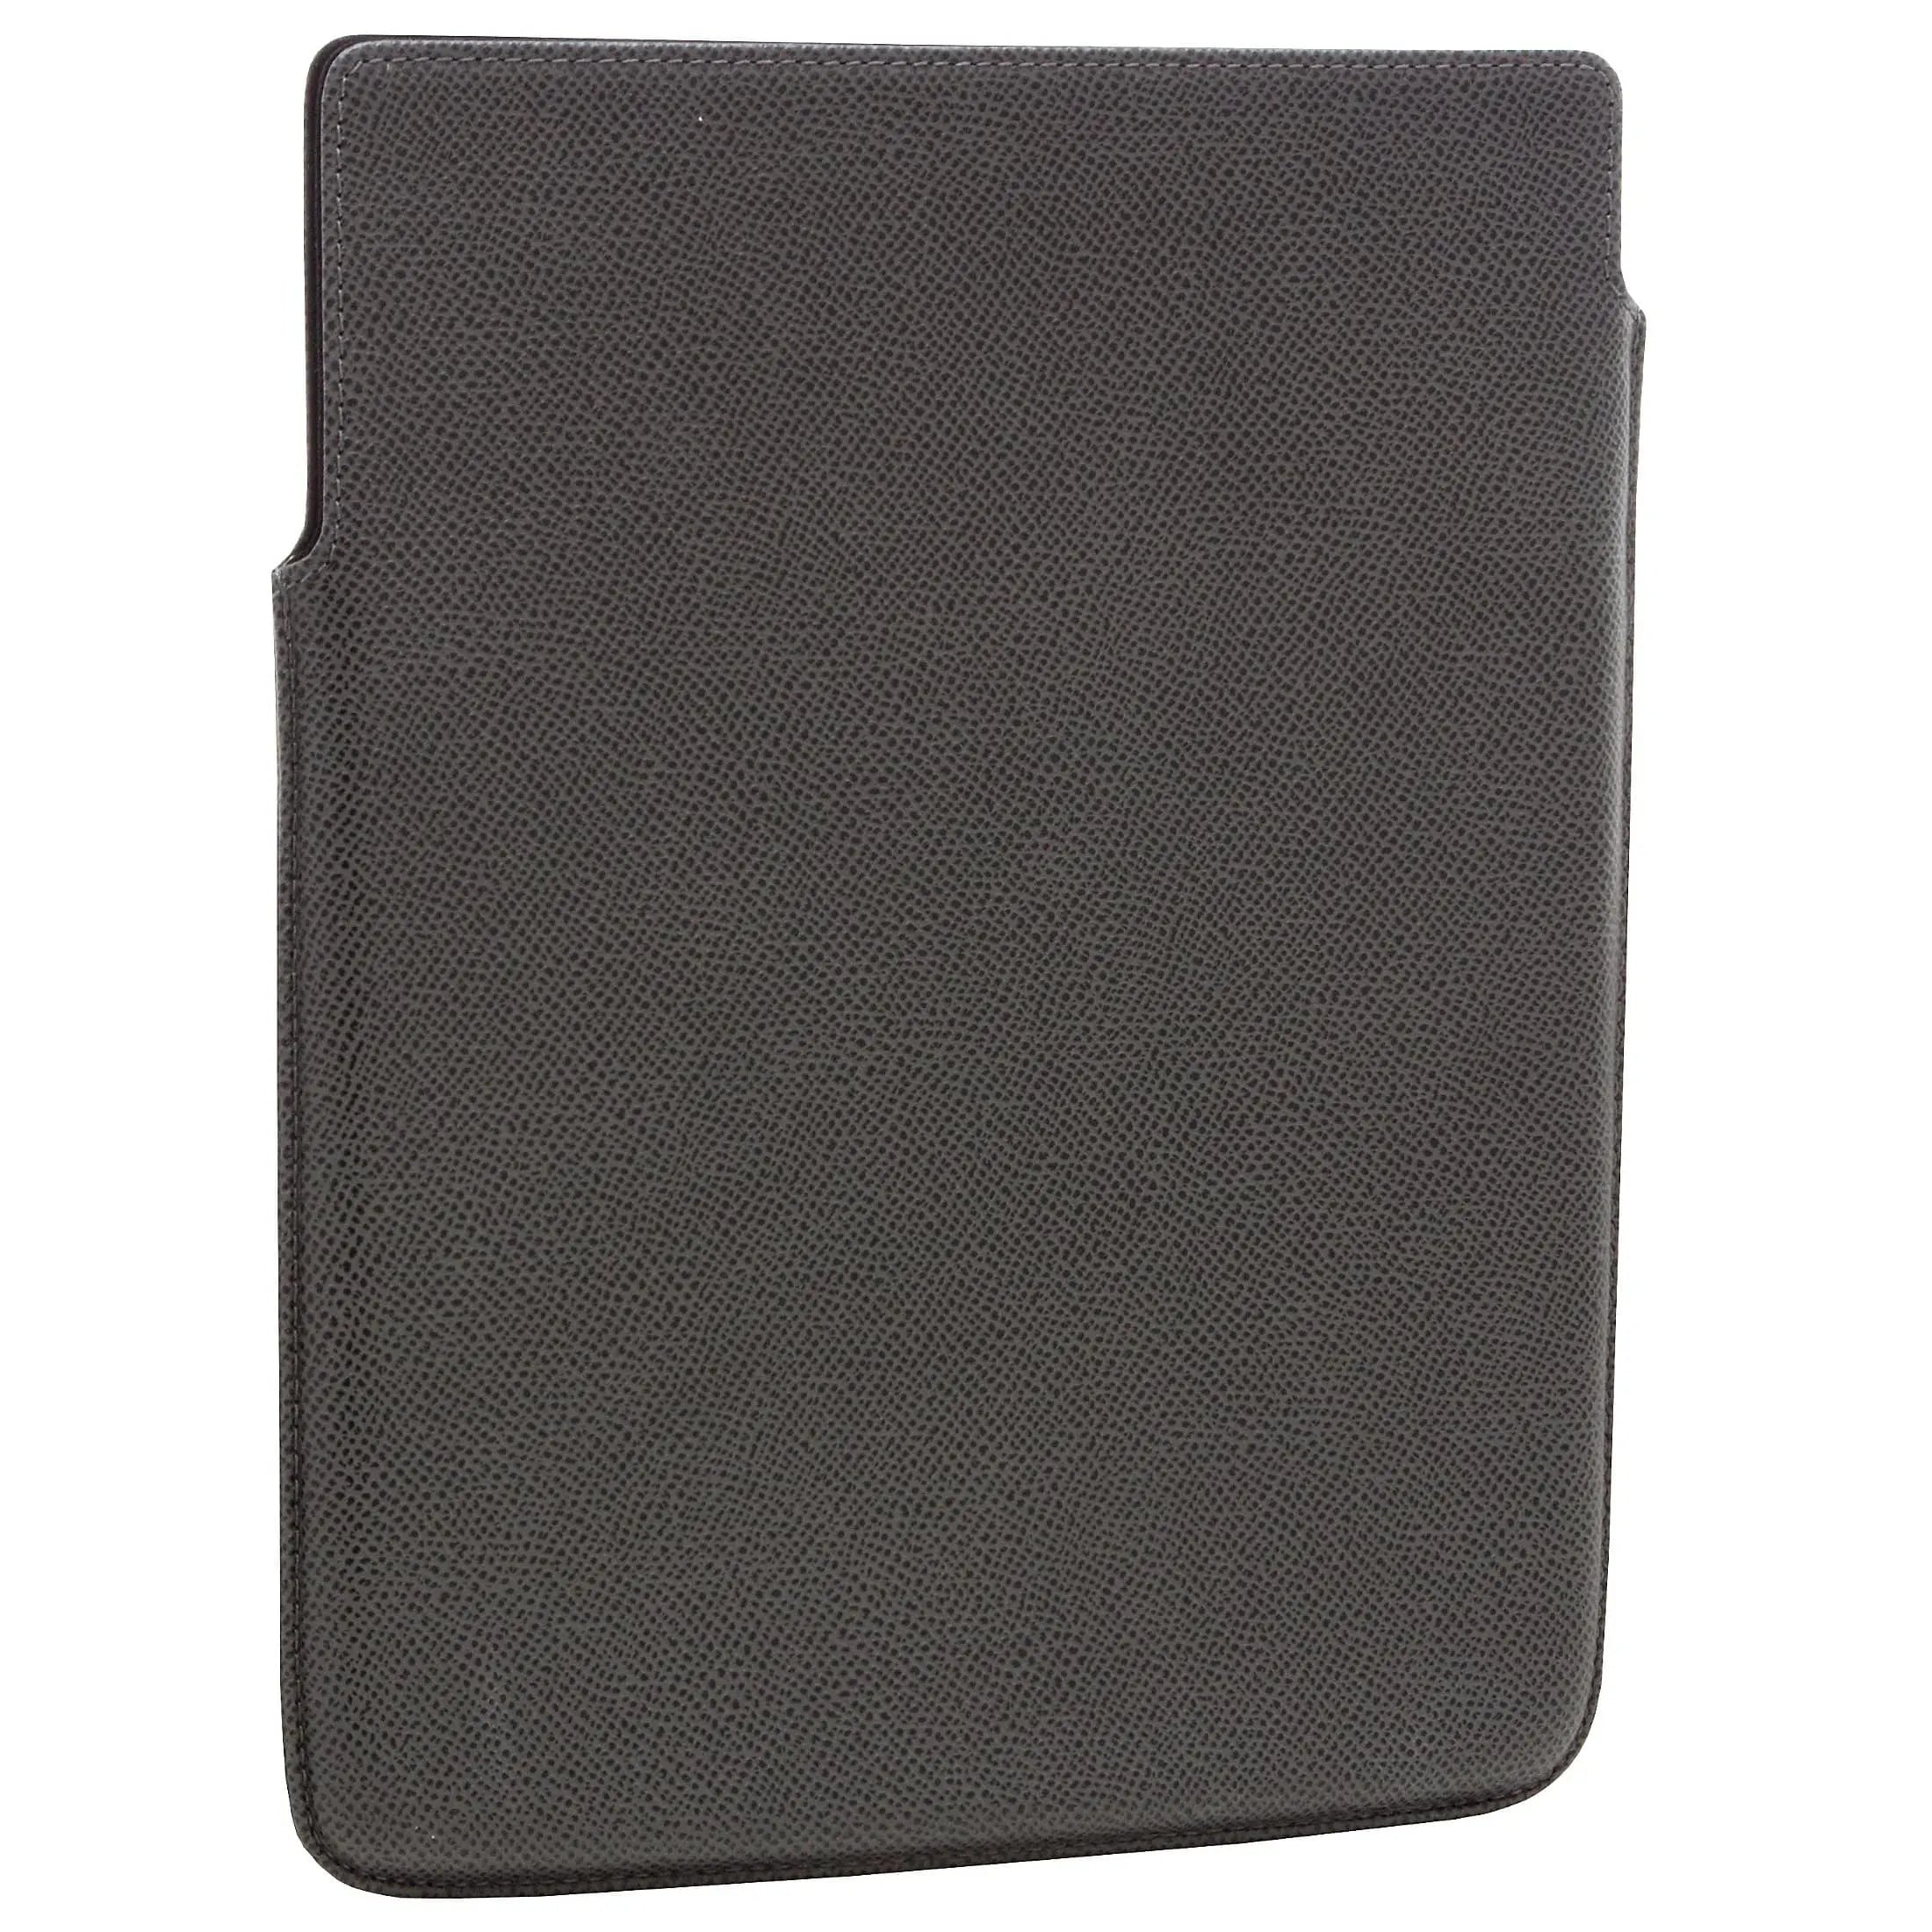 Porsche Design French Classic 2.0 Case sleeve for iPad 4 - dark gray